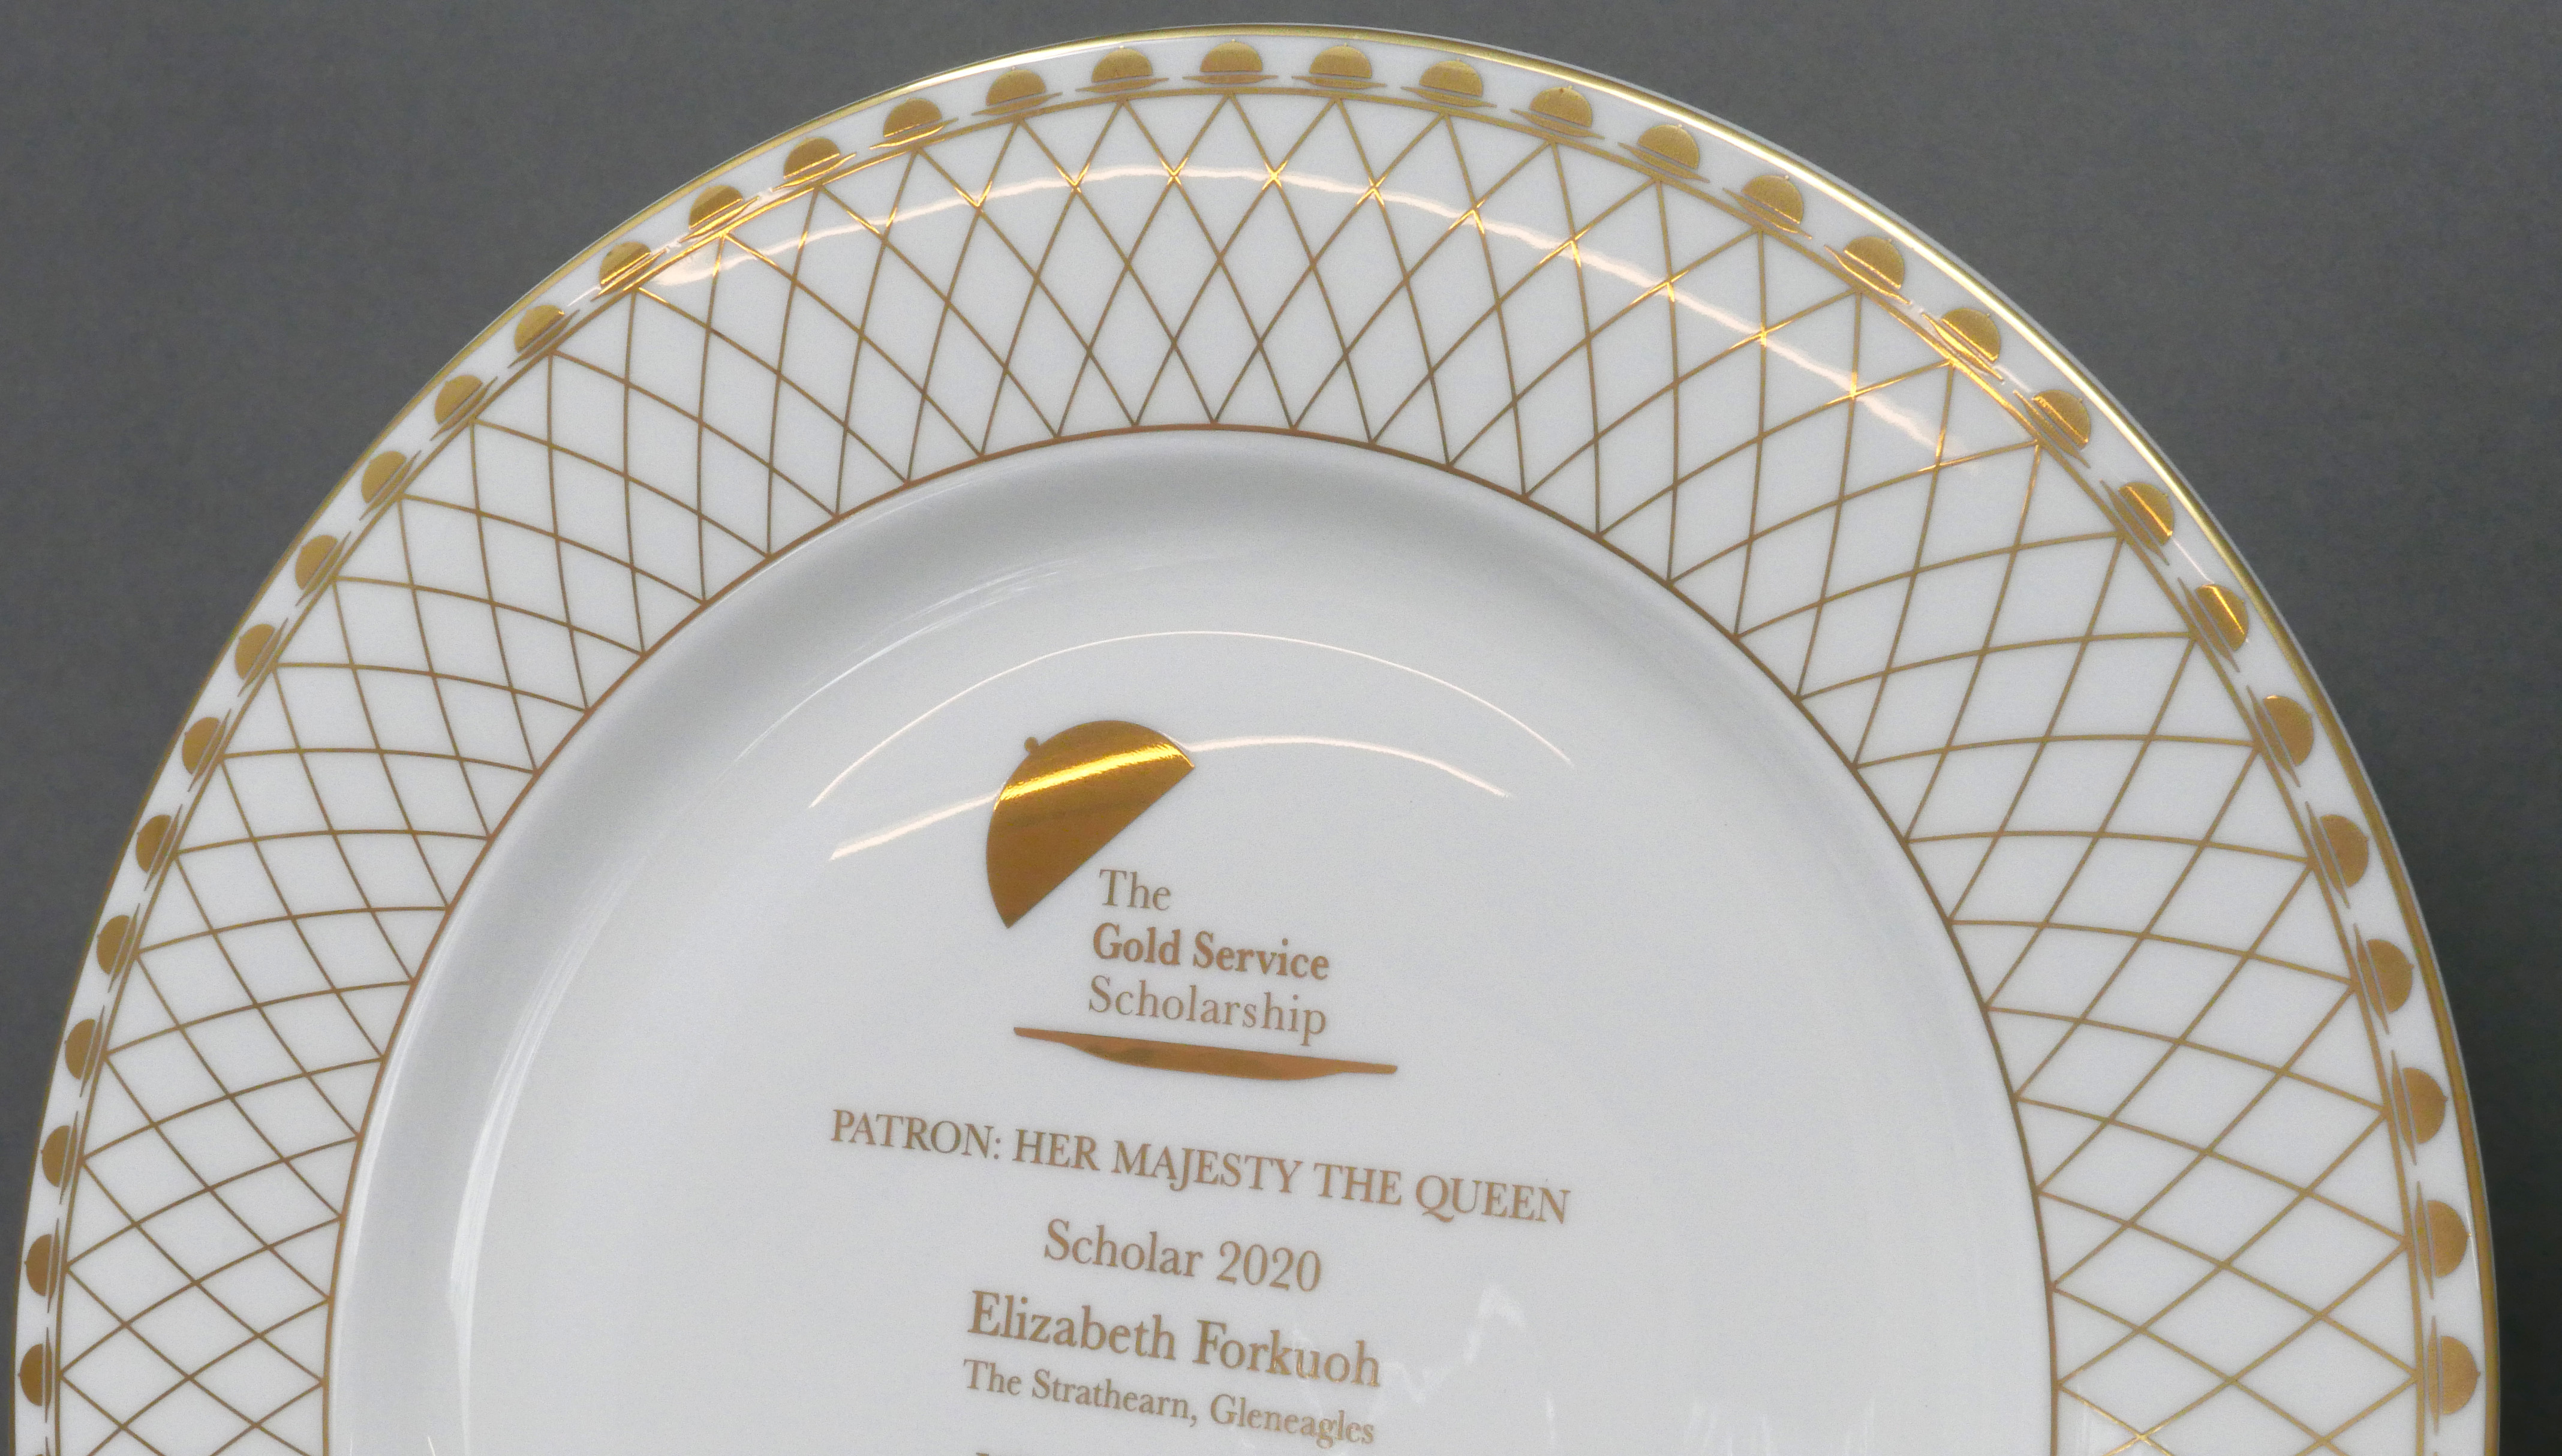 Bespoke presentation plate for the Gold Service Scholarship Award